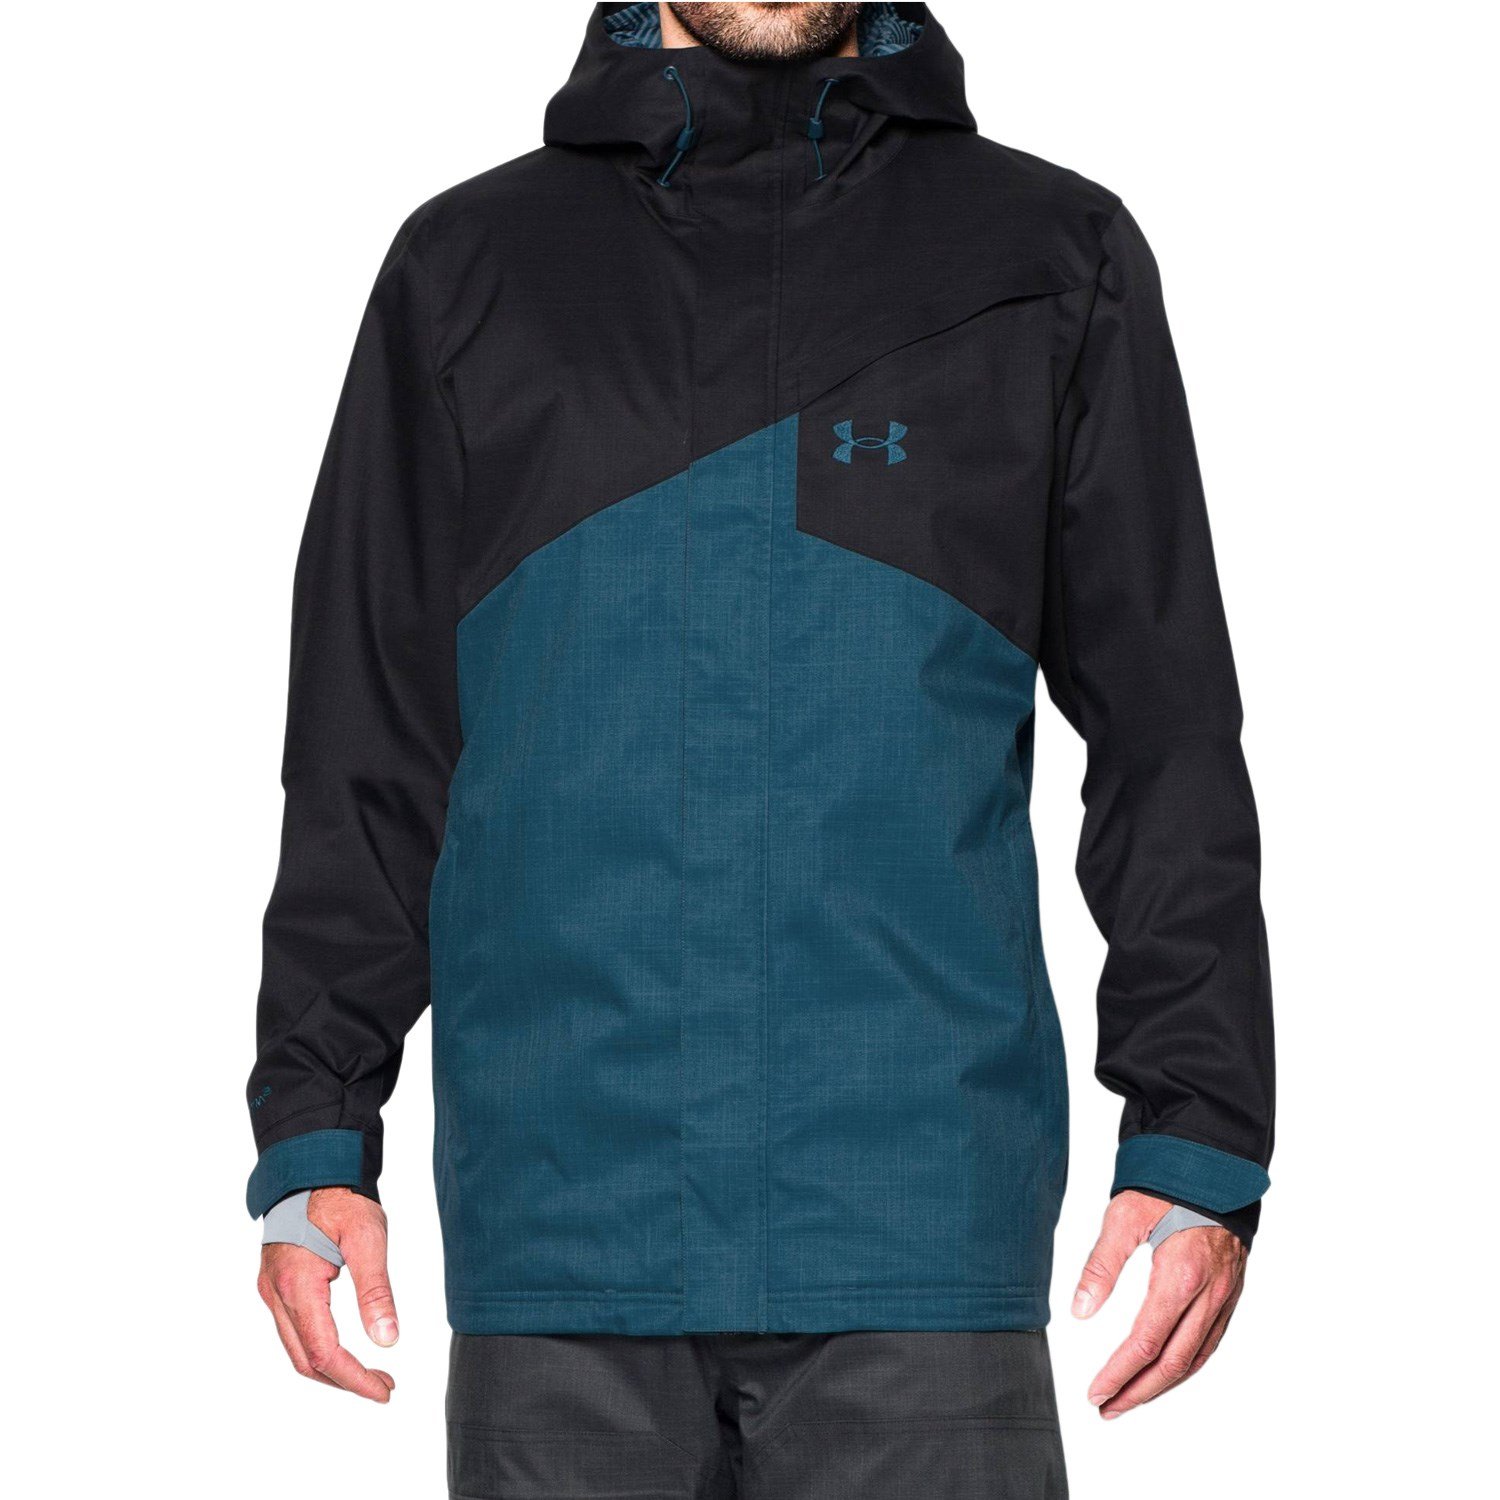 Cheap under armour ski jackets Buy 